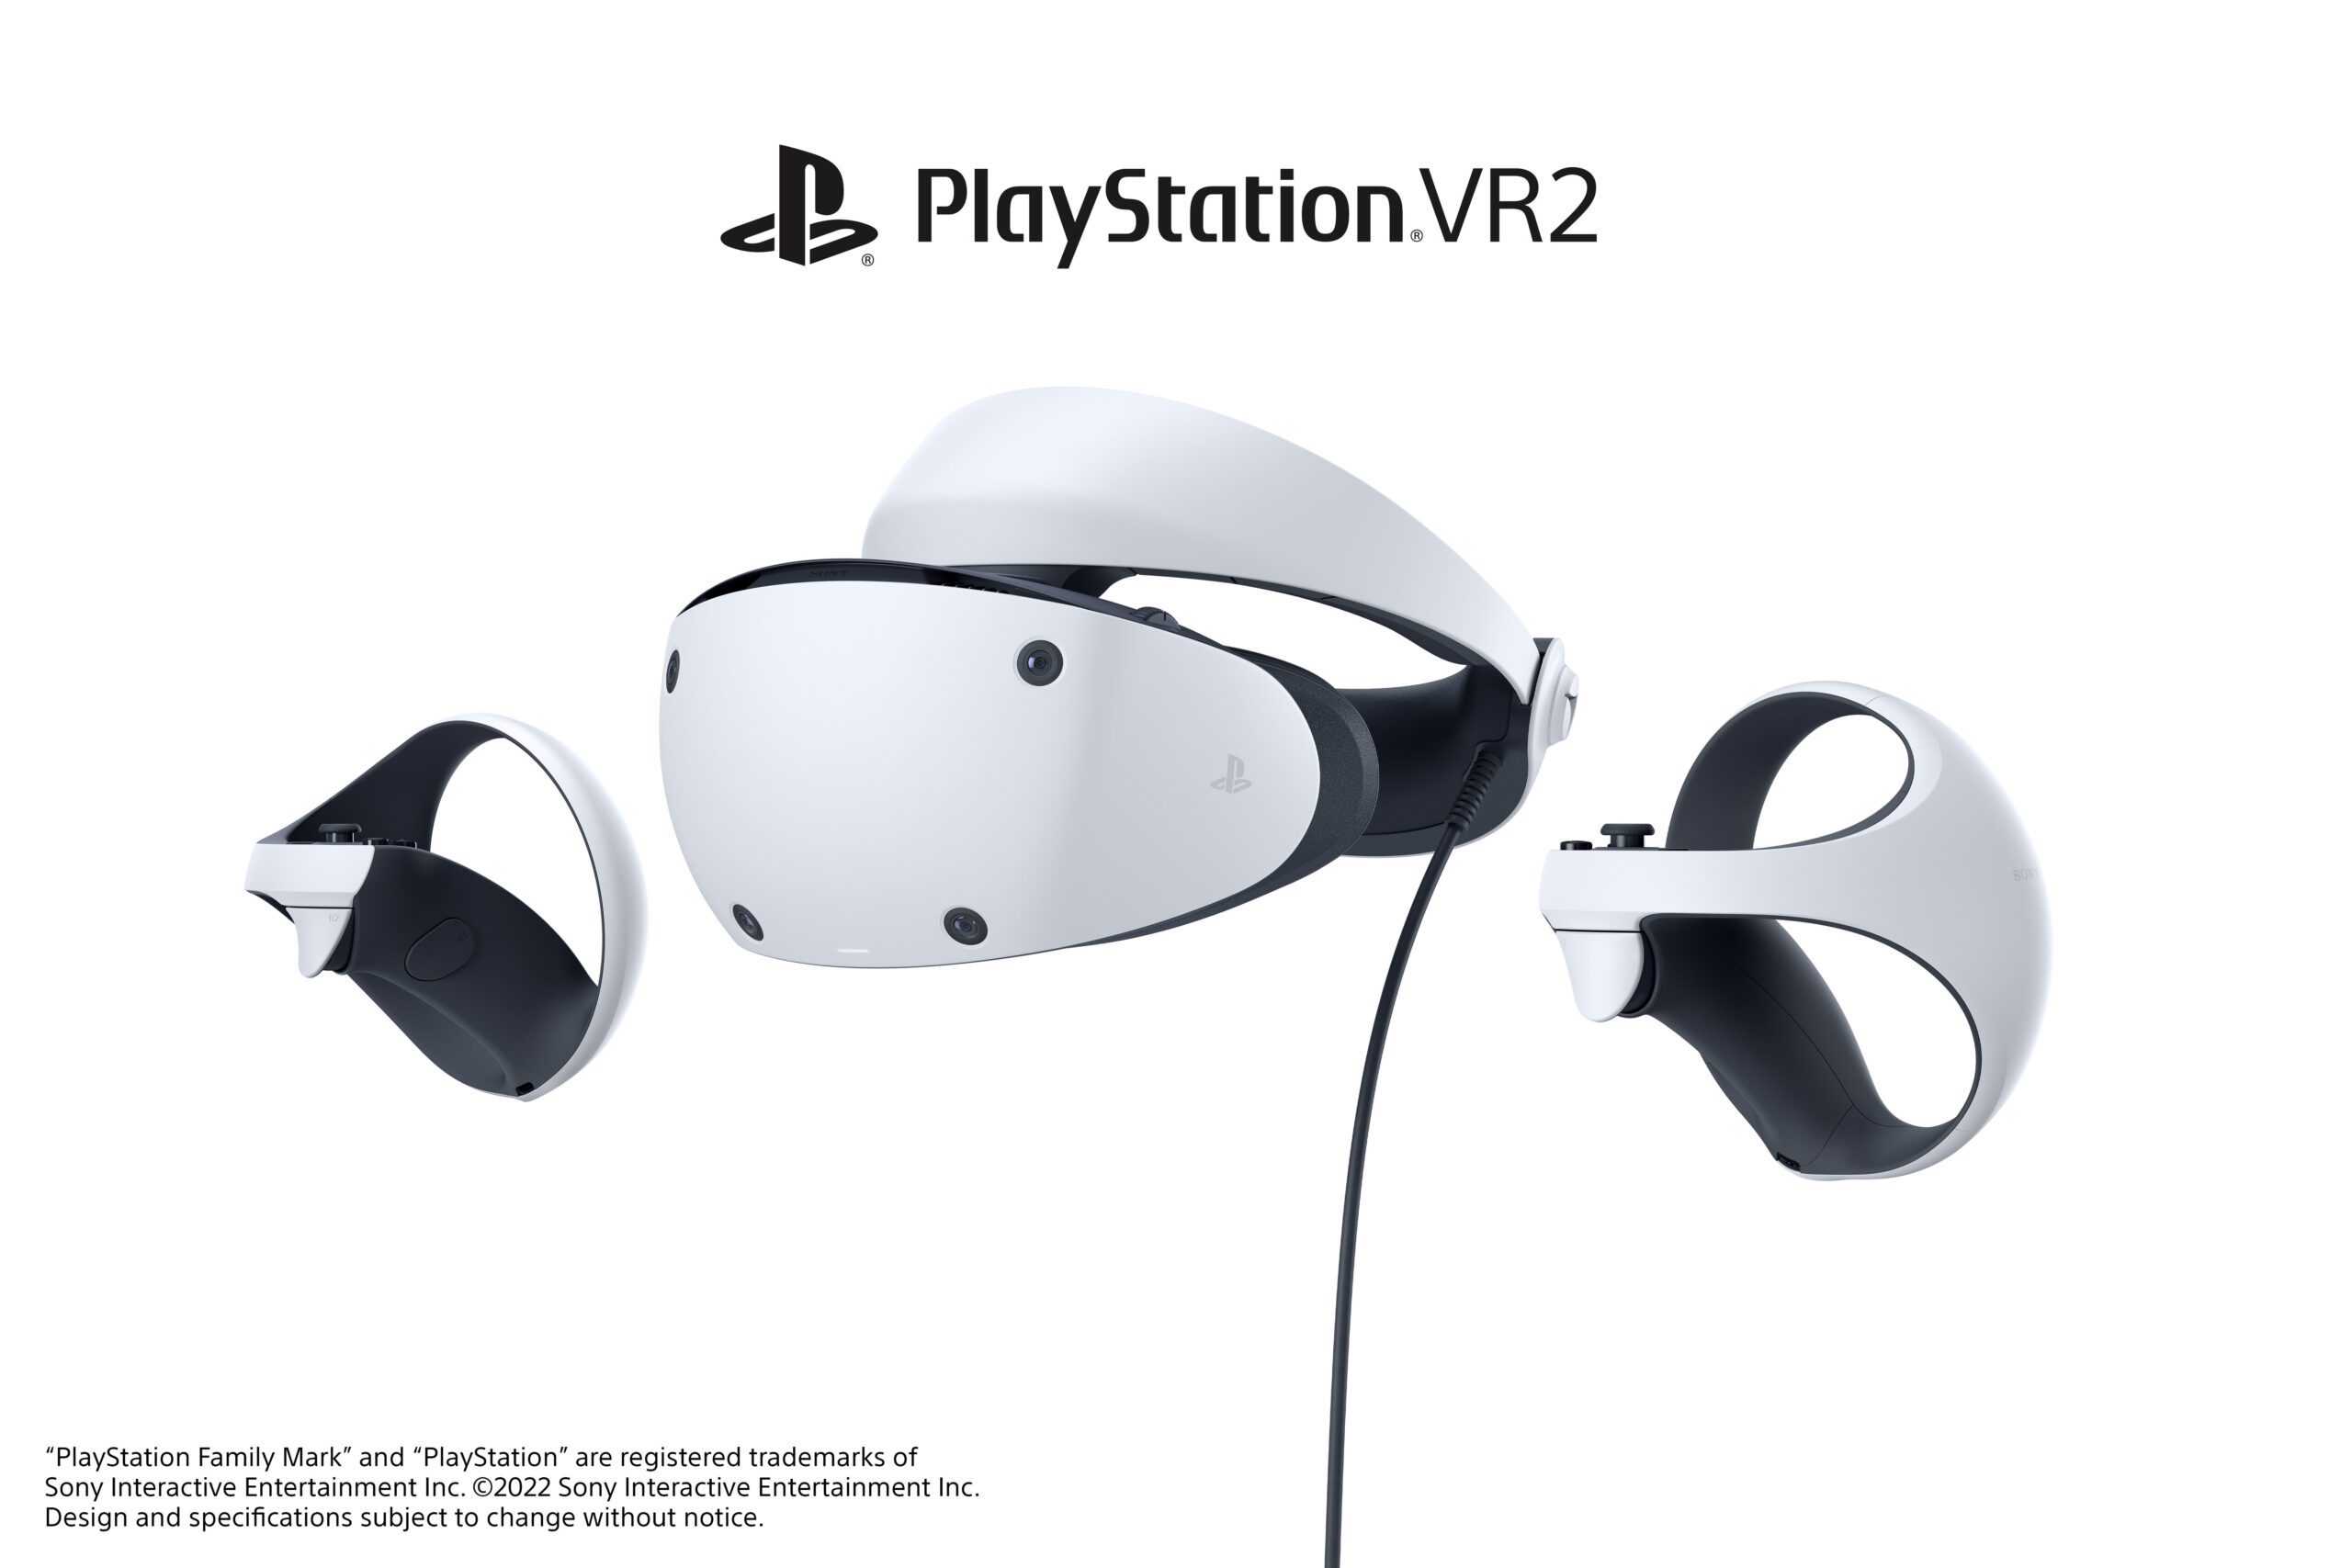 the headset design for PlayStation VR2 – PlayStation.Blog